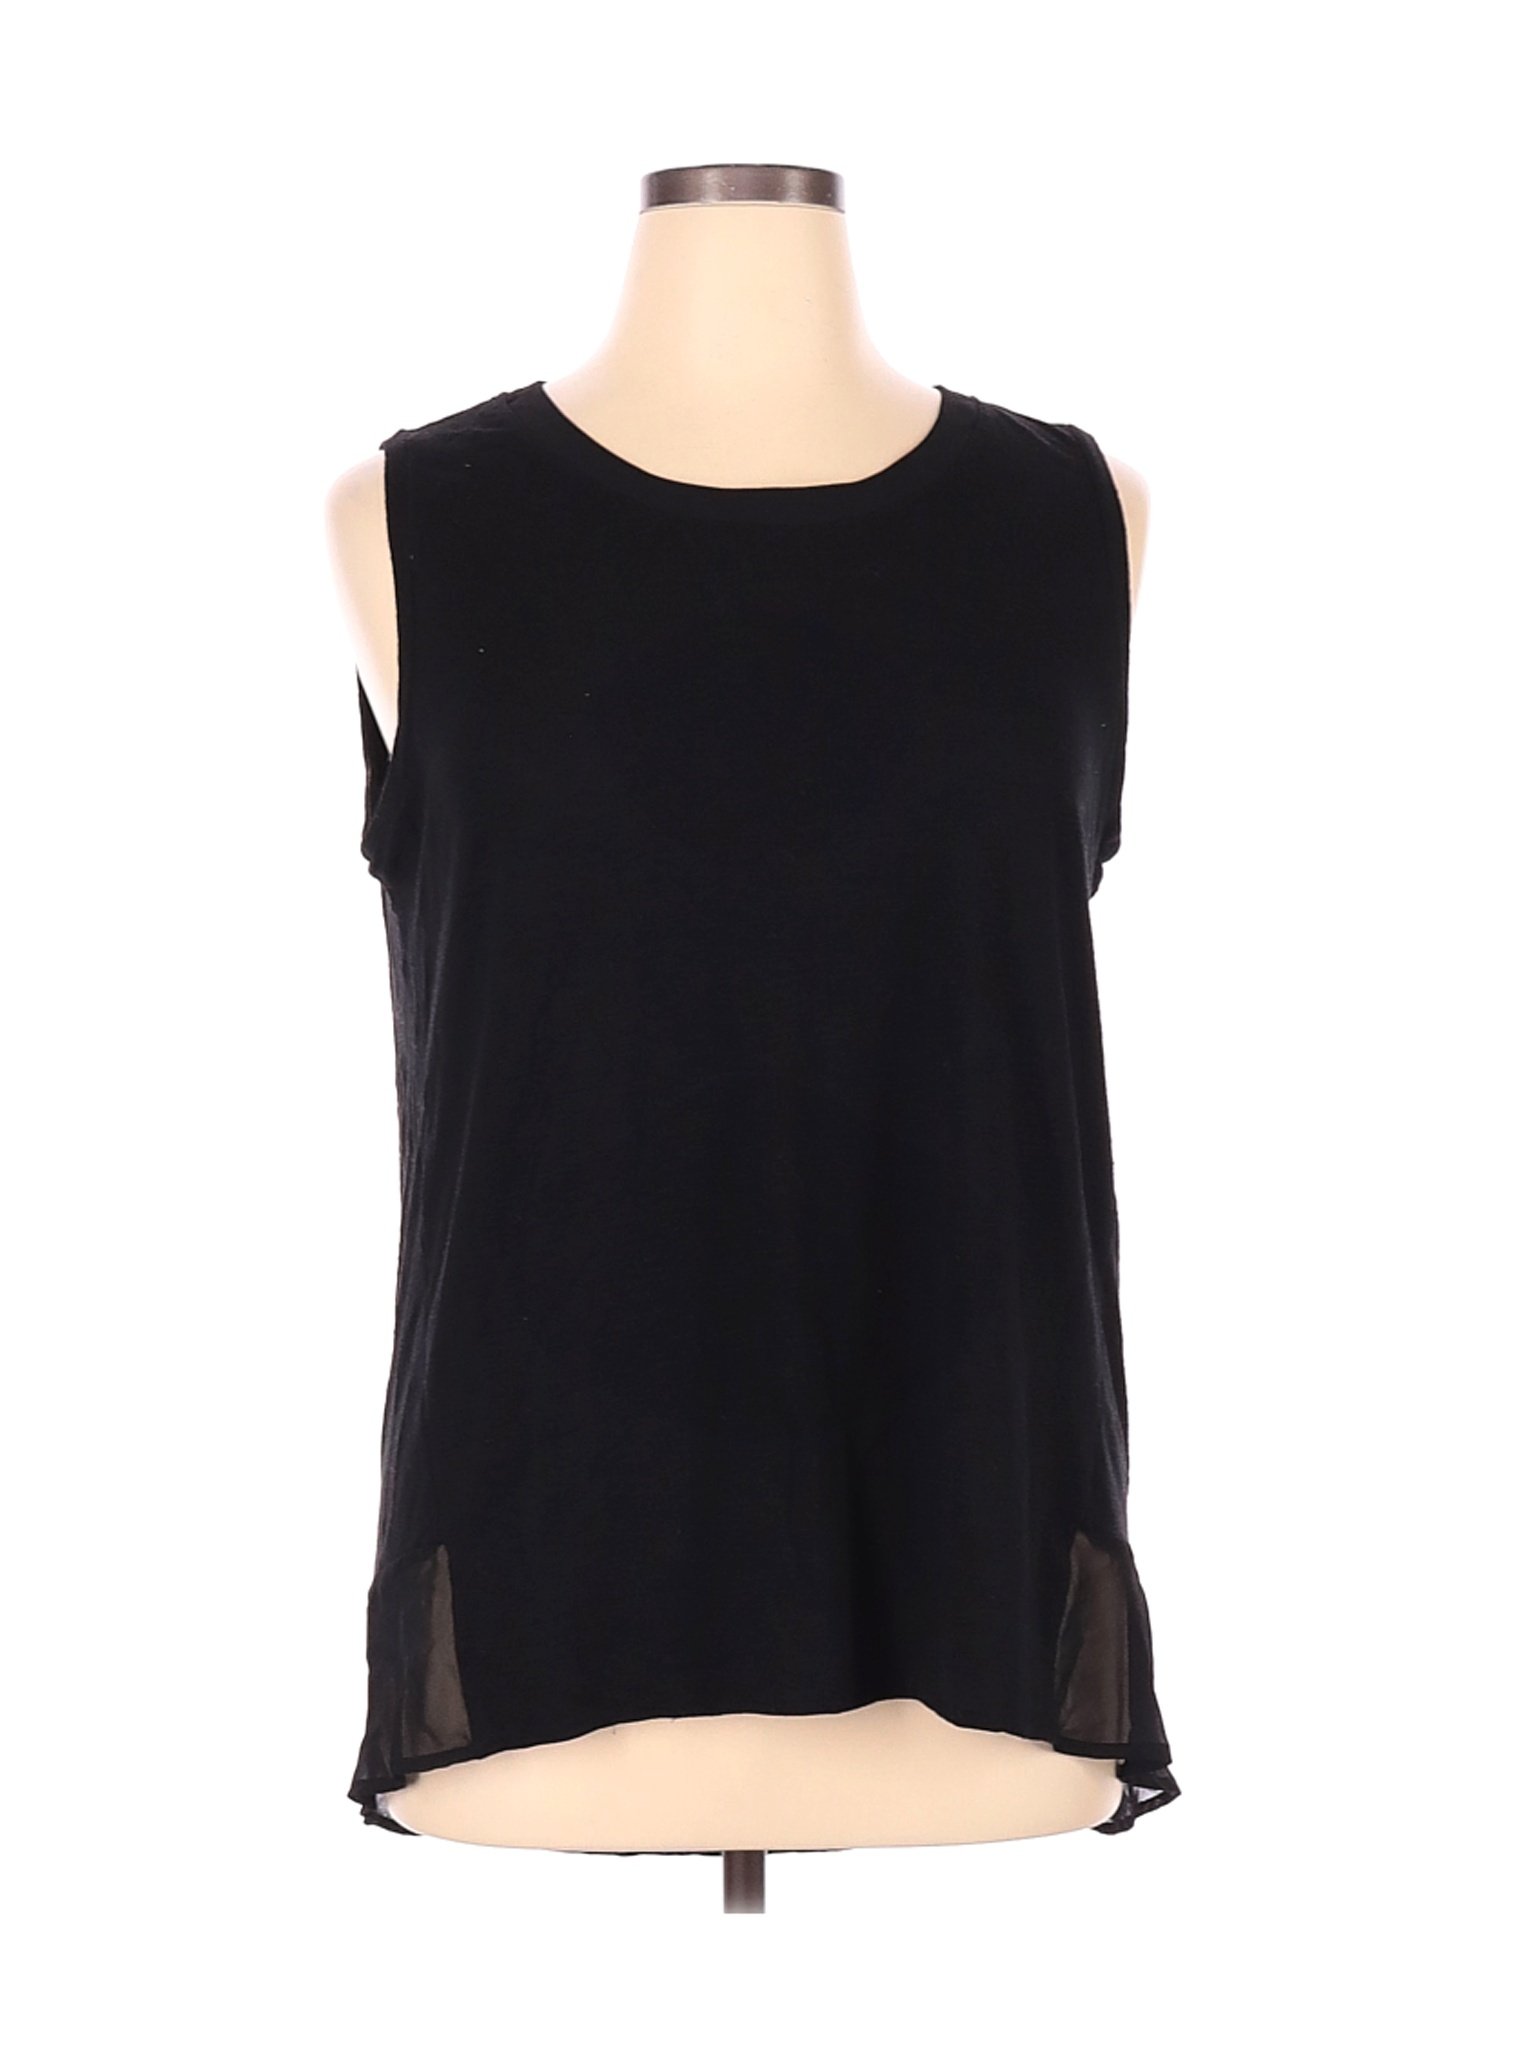 Adrienne Vittadini Women Black Sleeveless Top XL | eBay